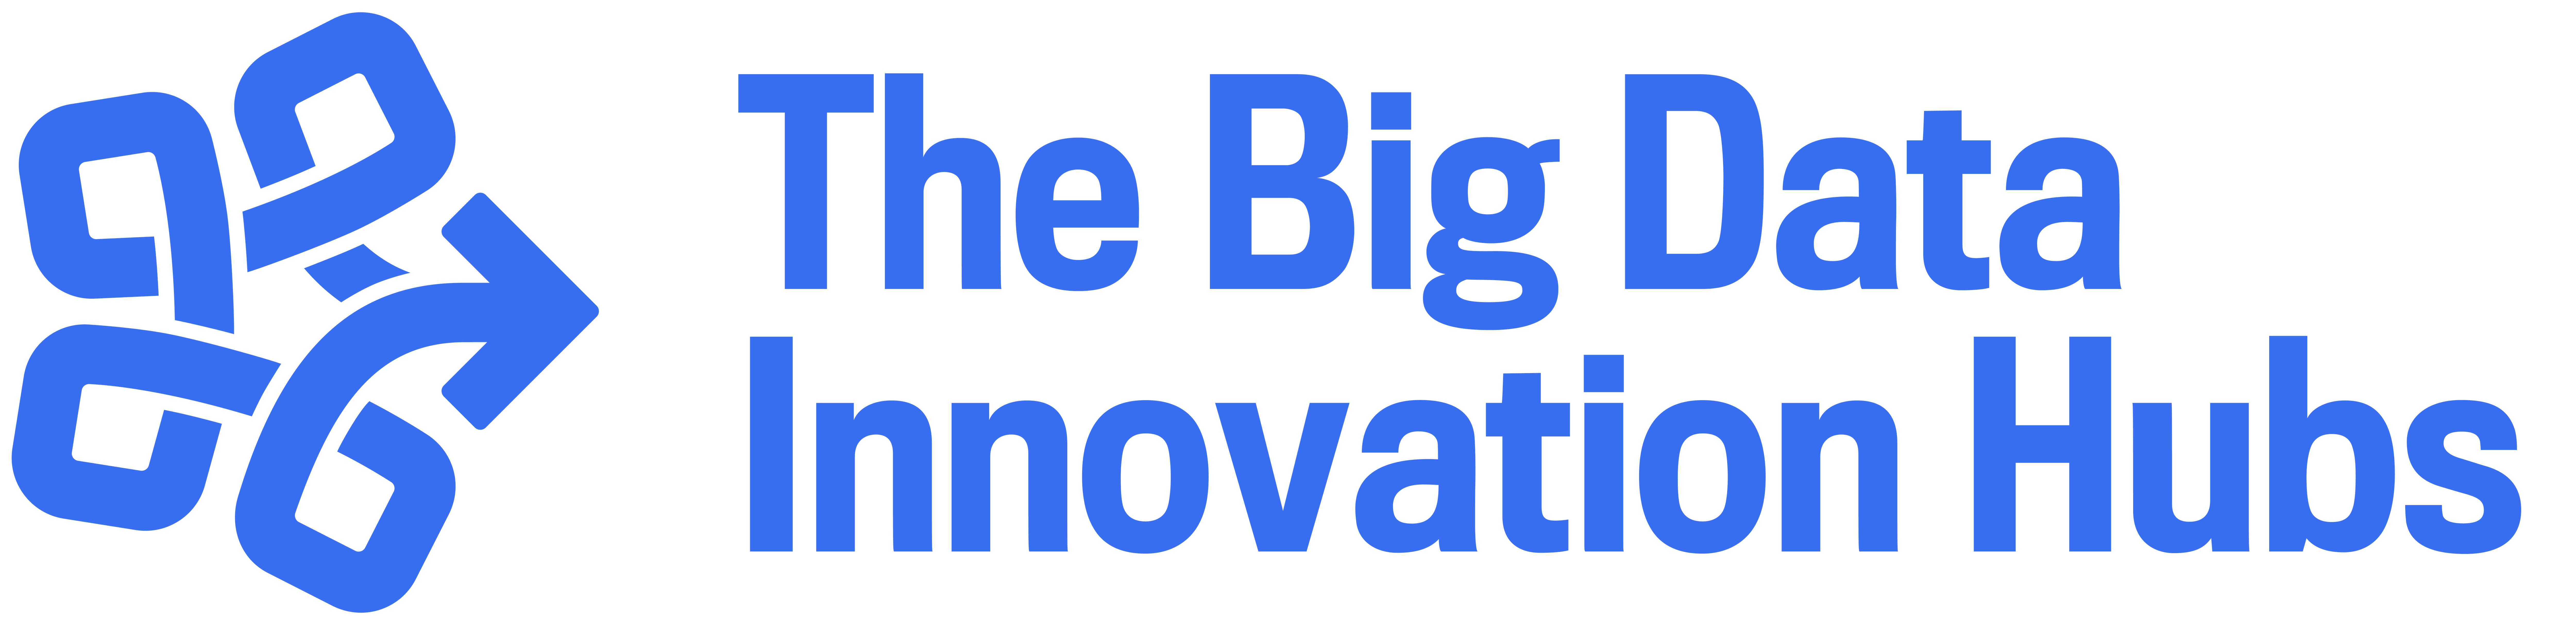 The Big Data Innovation Hubs